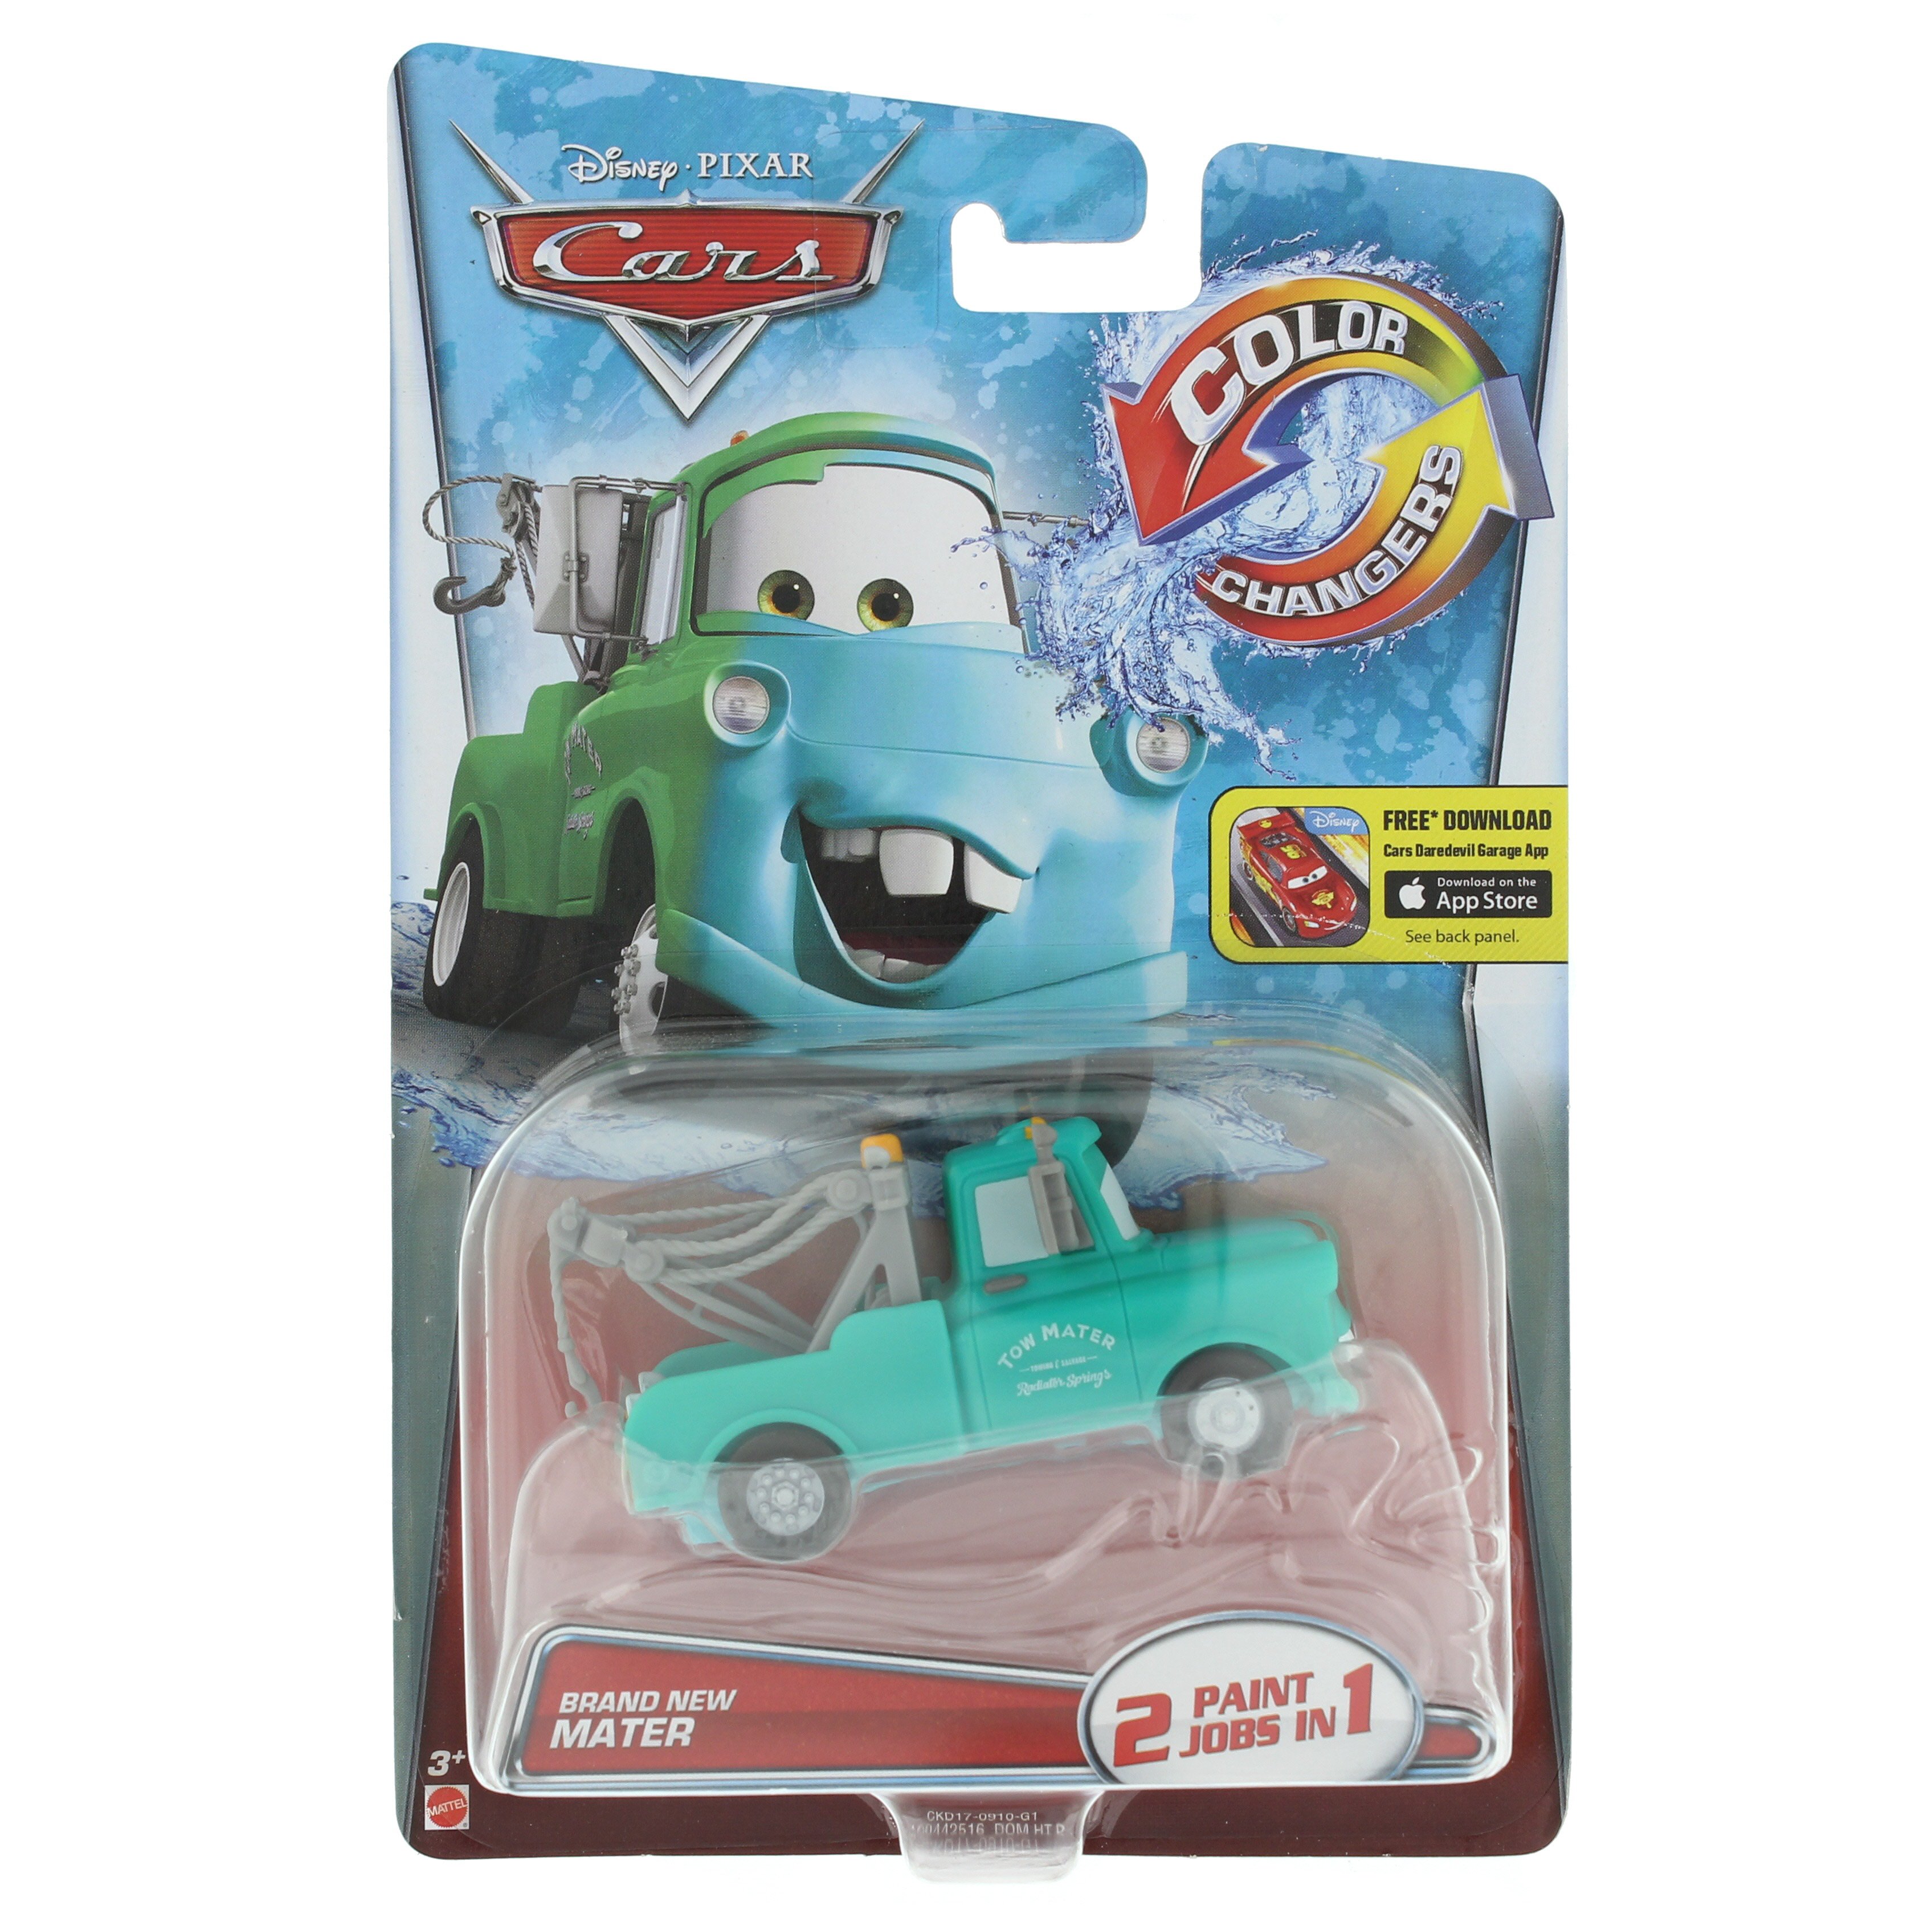 Disney Pixar Cars Story Sets Playset Assortment - Shop Playsets at H-E-B